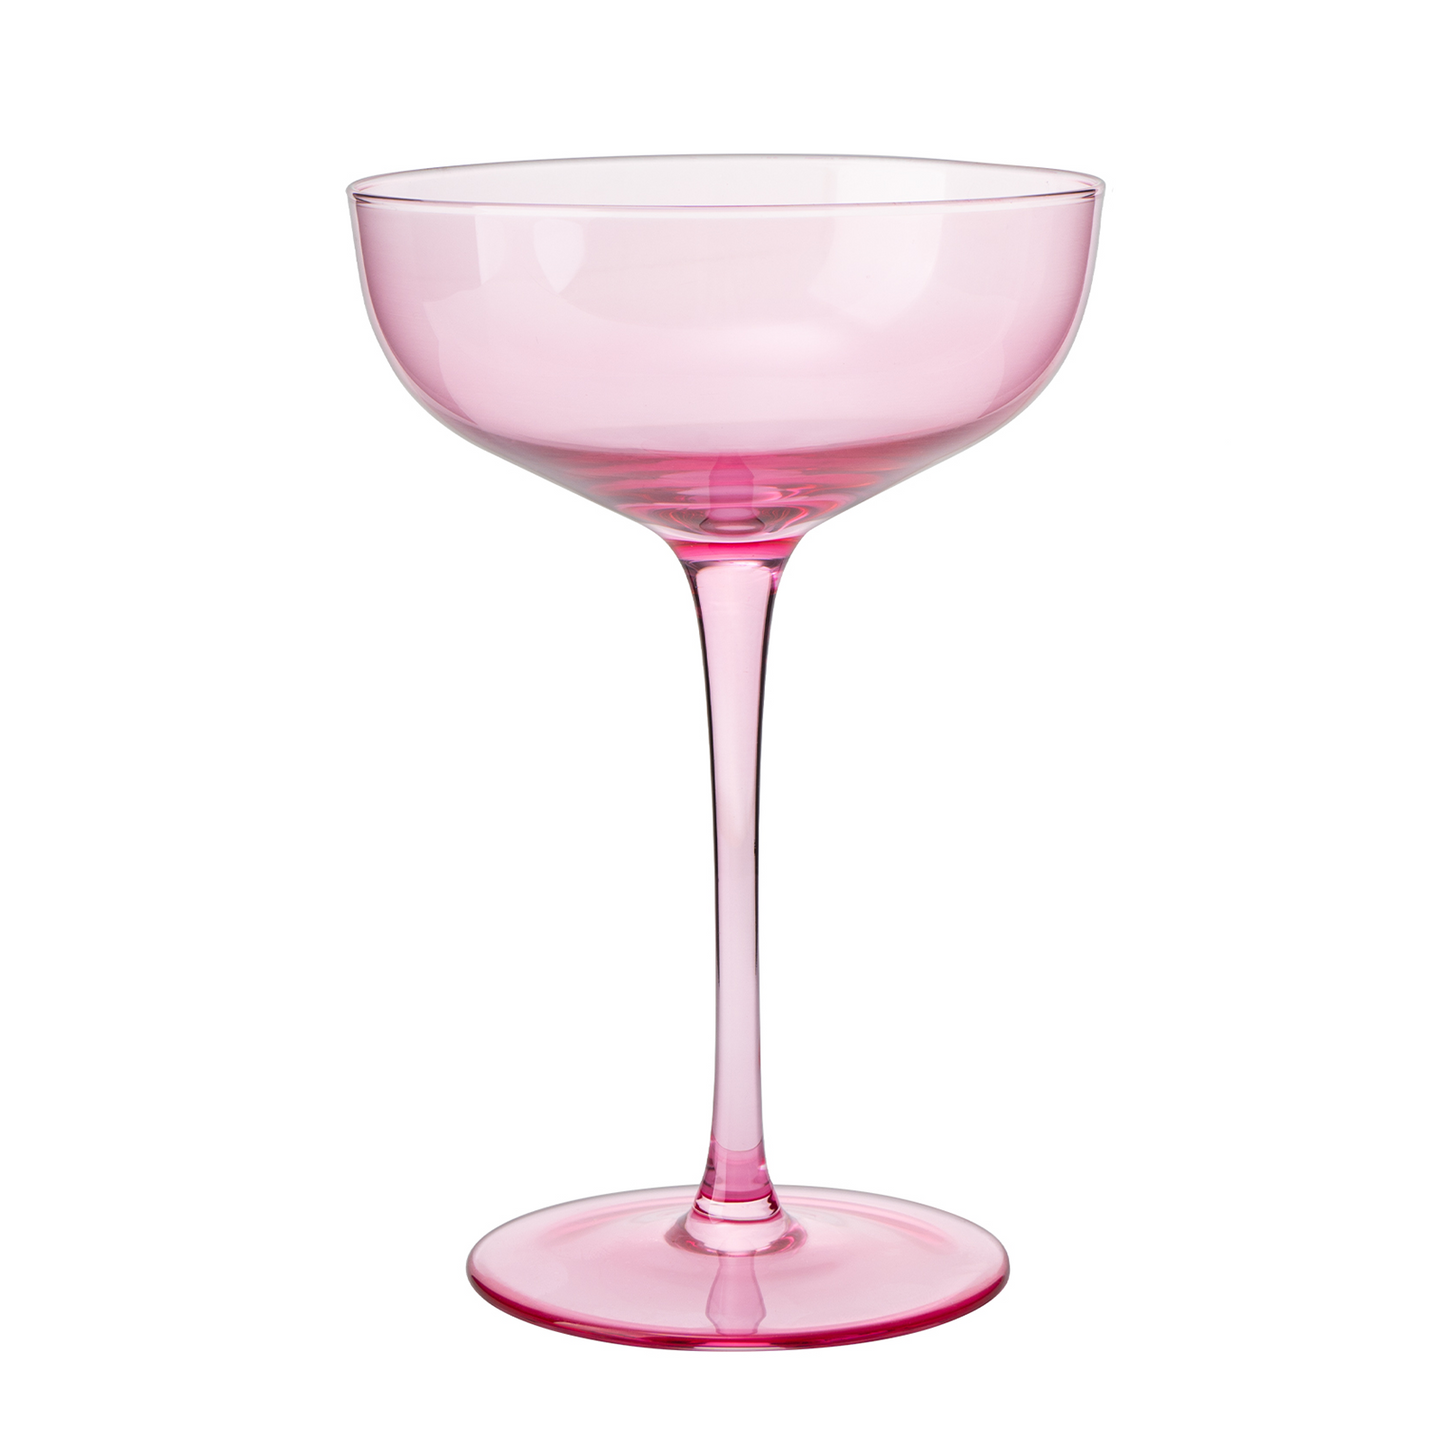 Vicolo Coupe Cocktail Glassware, Set of 4, Rose